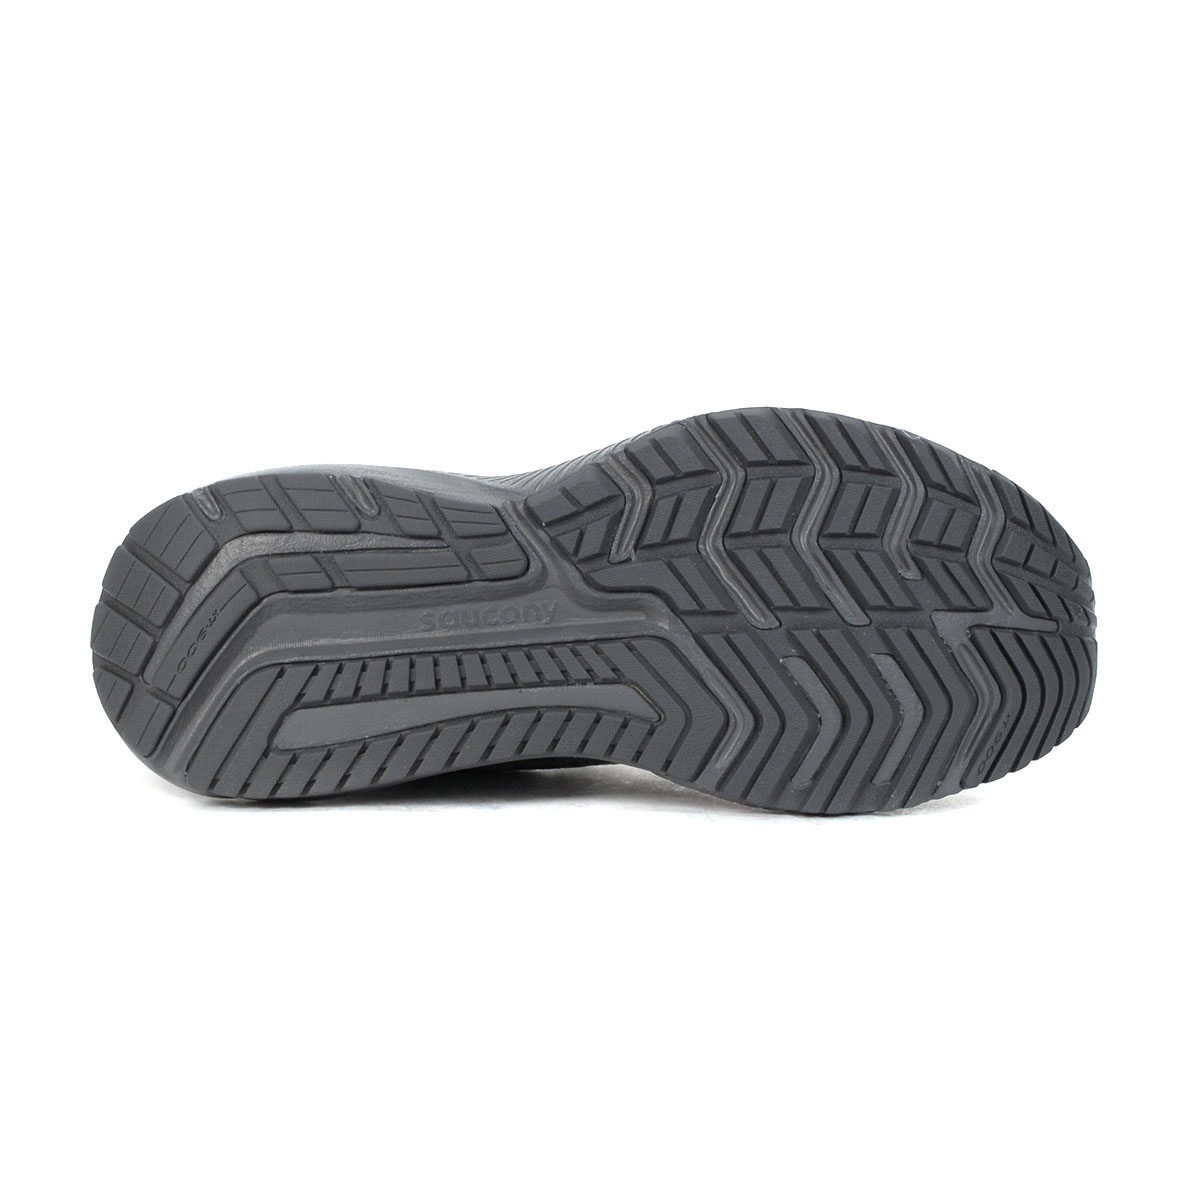 Saucony Men's Omni 21 Asphalt Running Shoes S20762-101 - WOOKI.COM